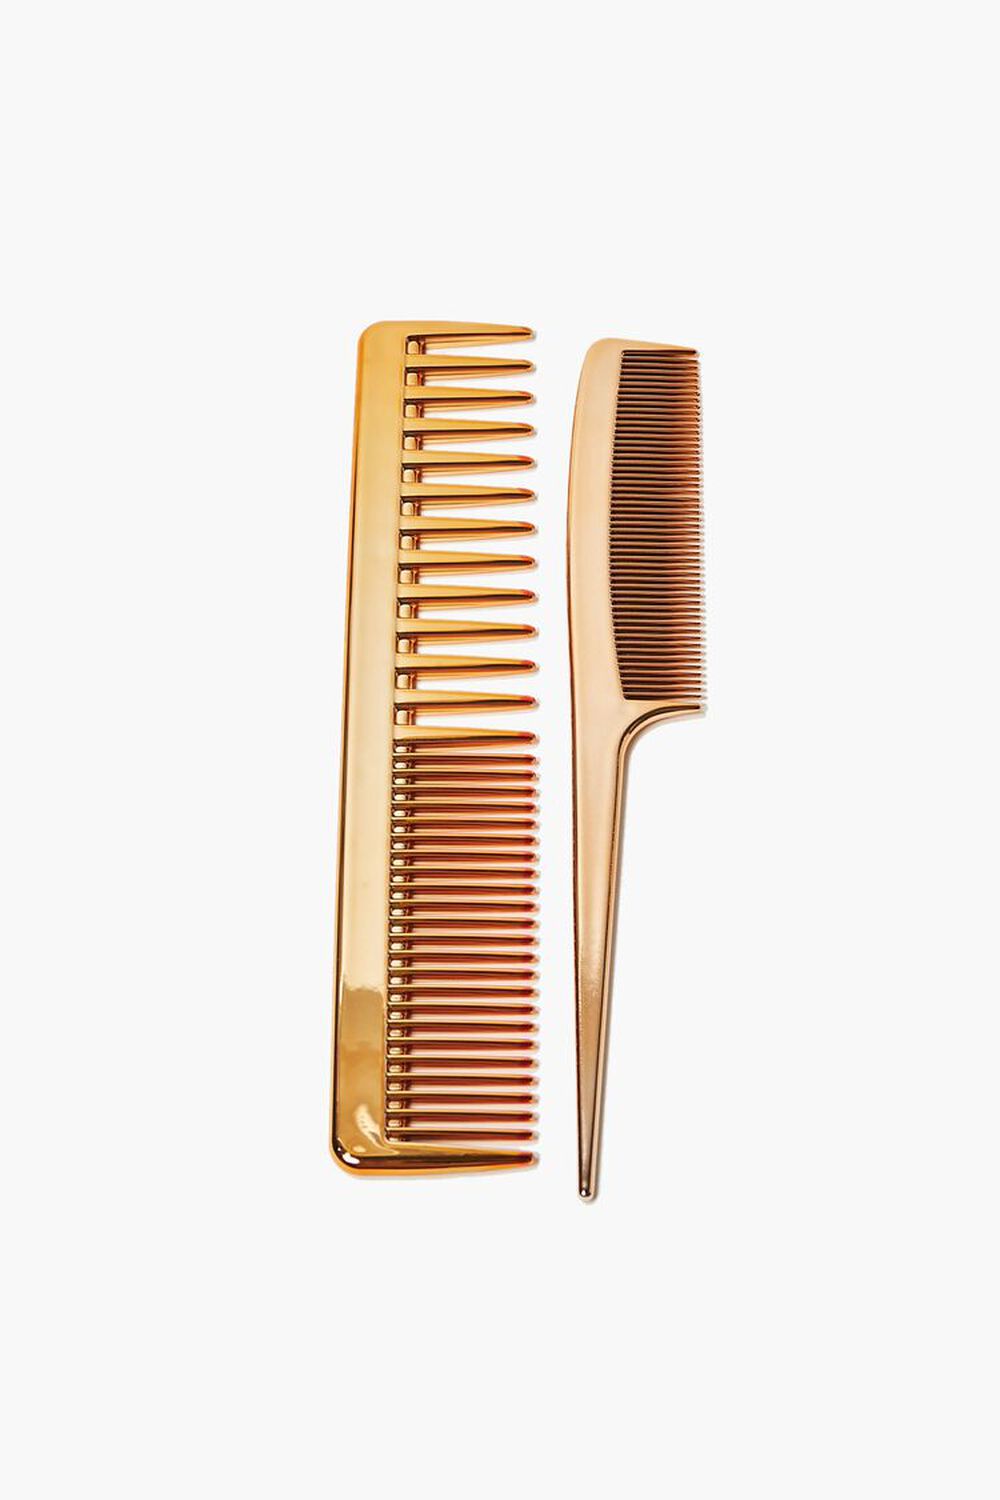 GOLD Reflective Comb Set, image 1